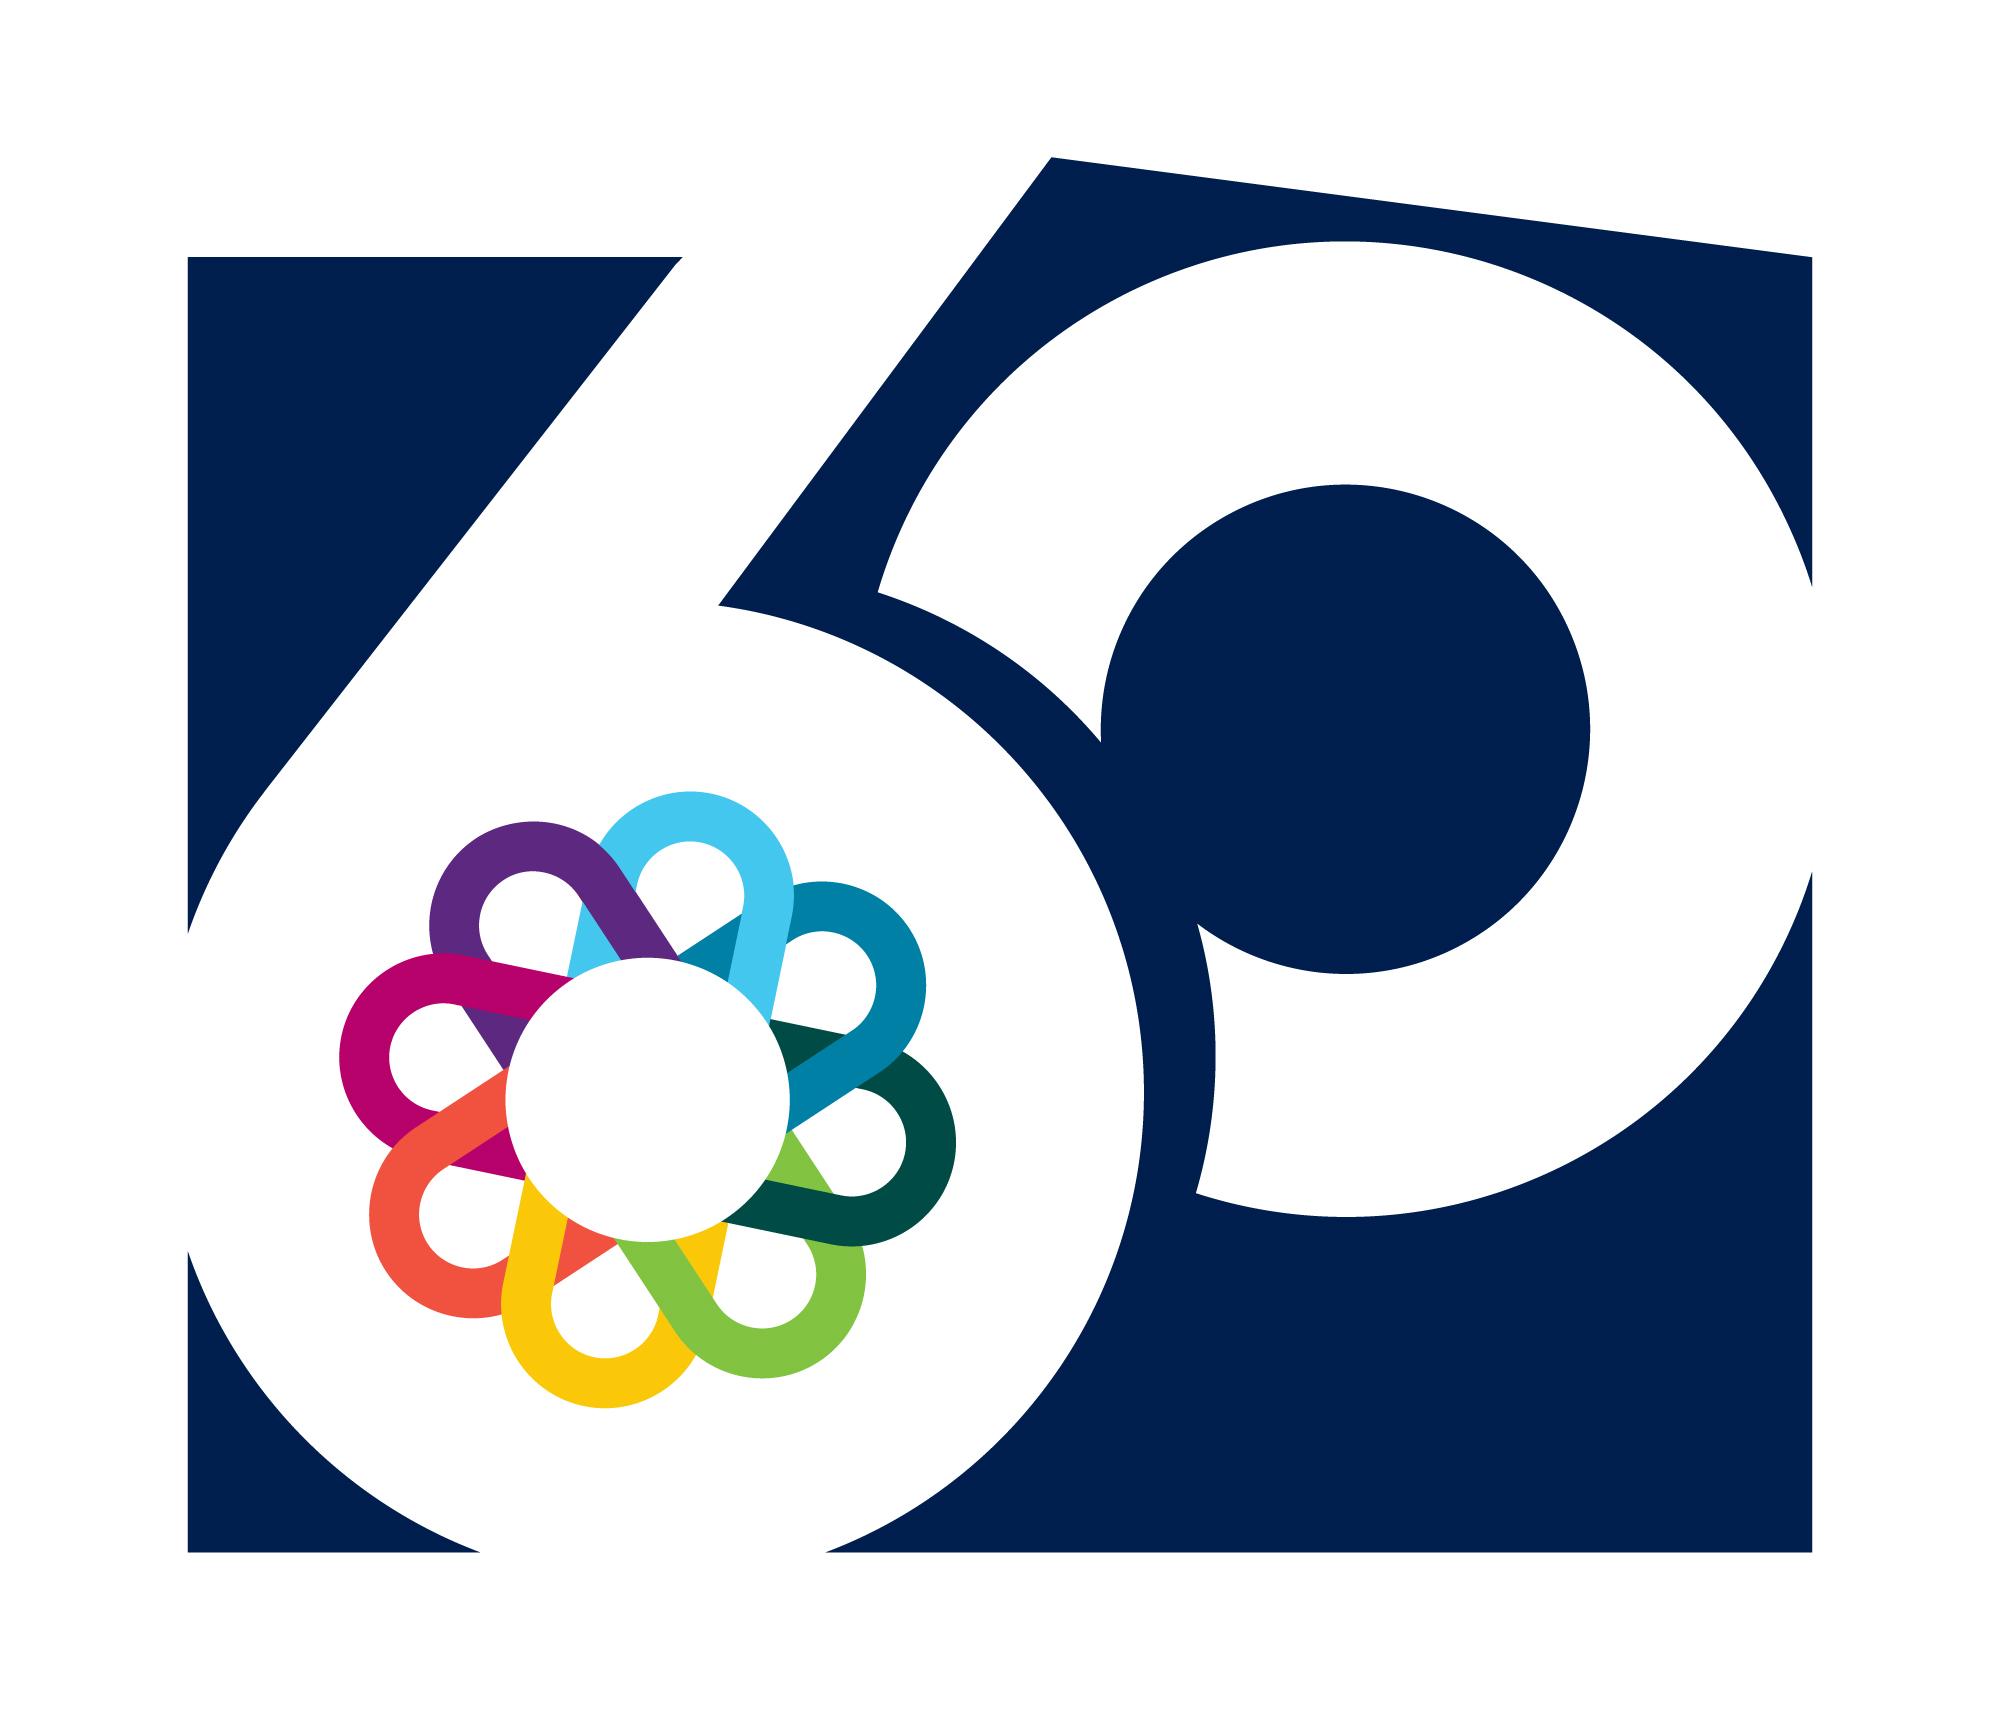 U of T Scarborough 60th anniversary logo